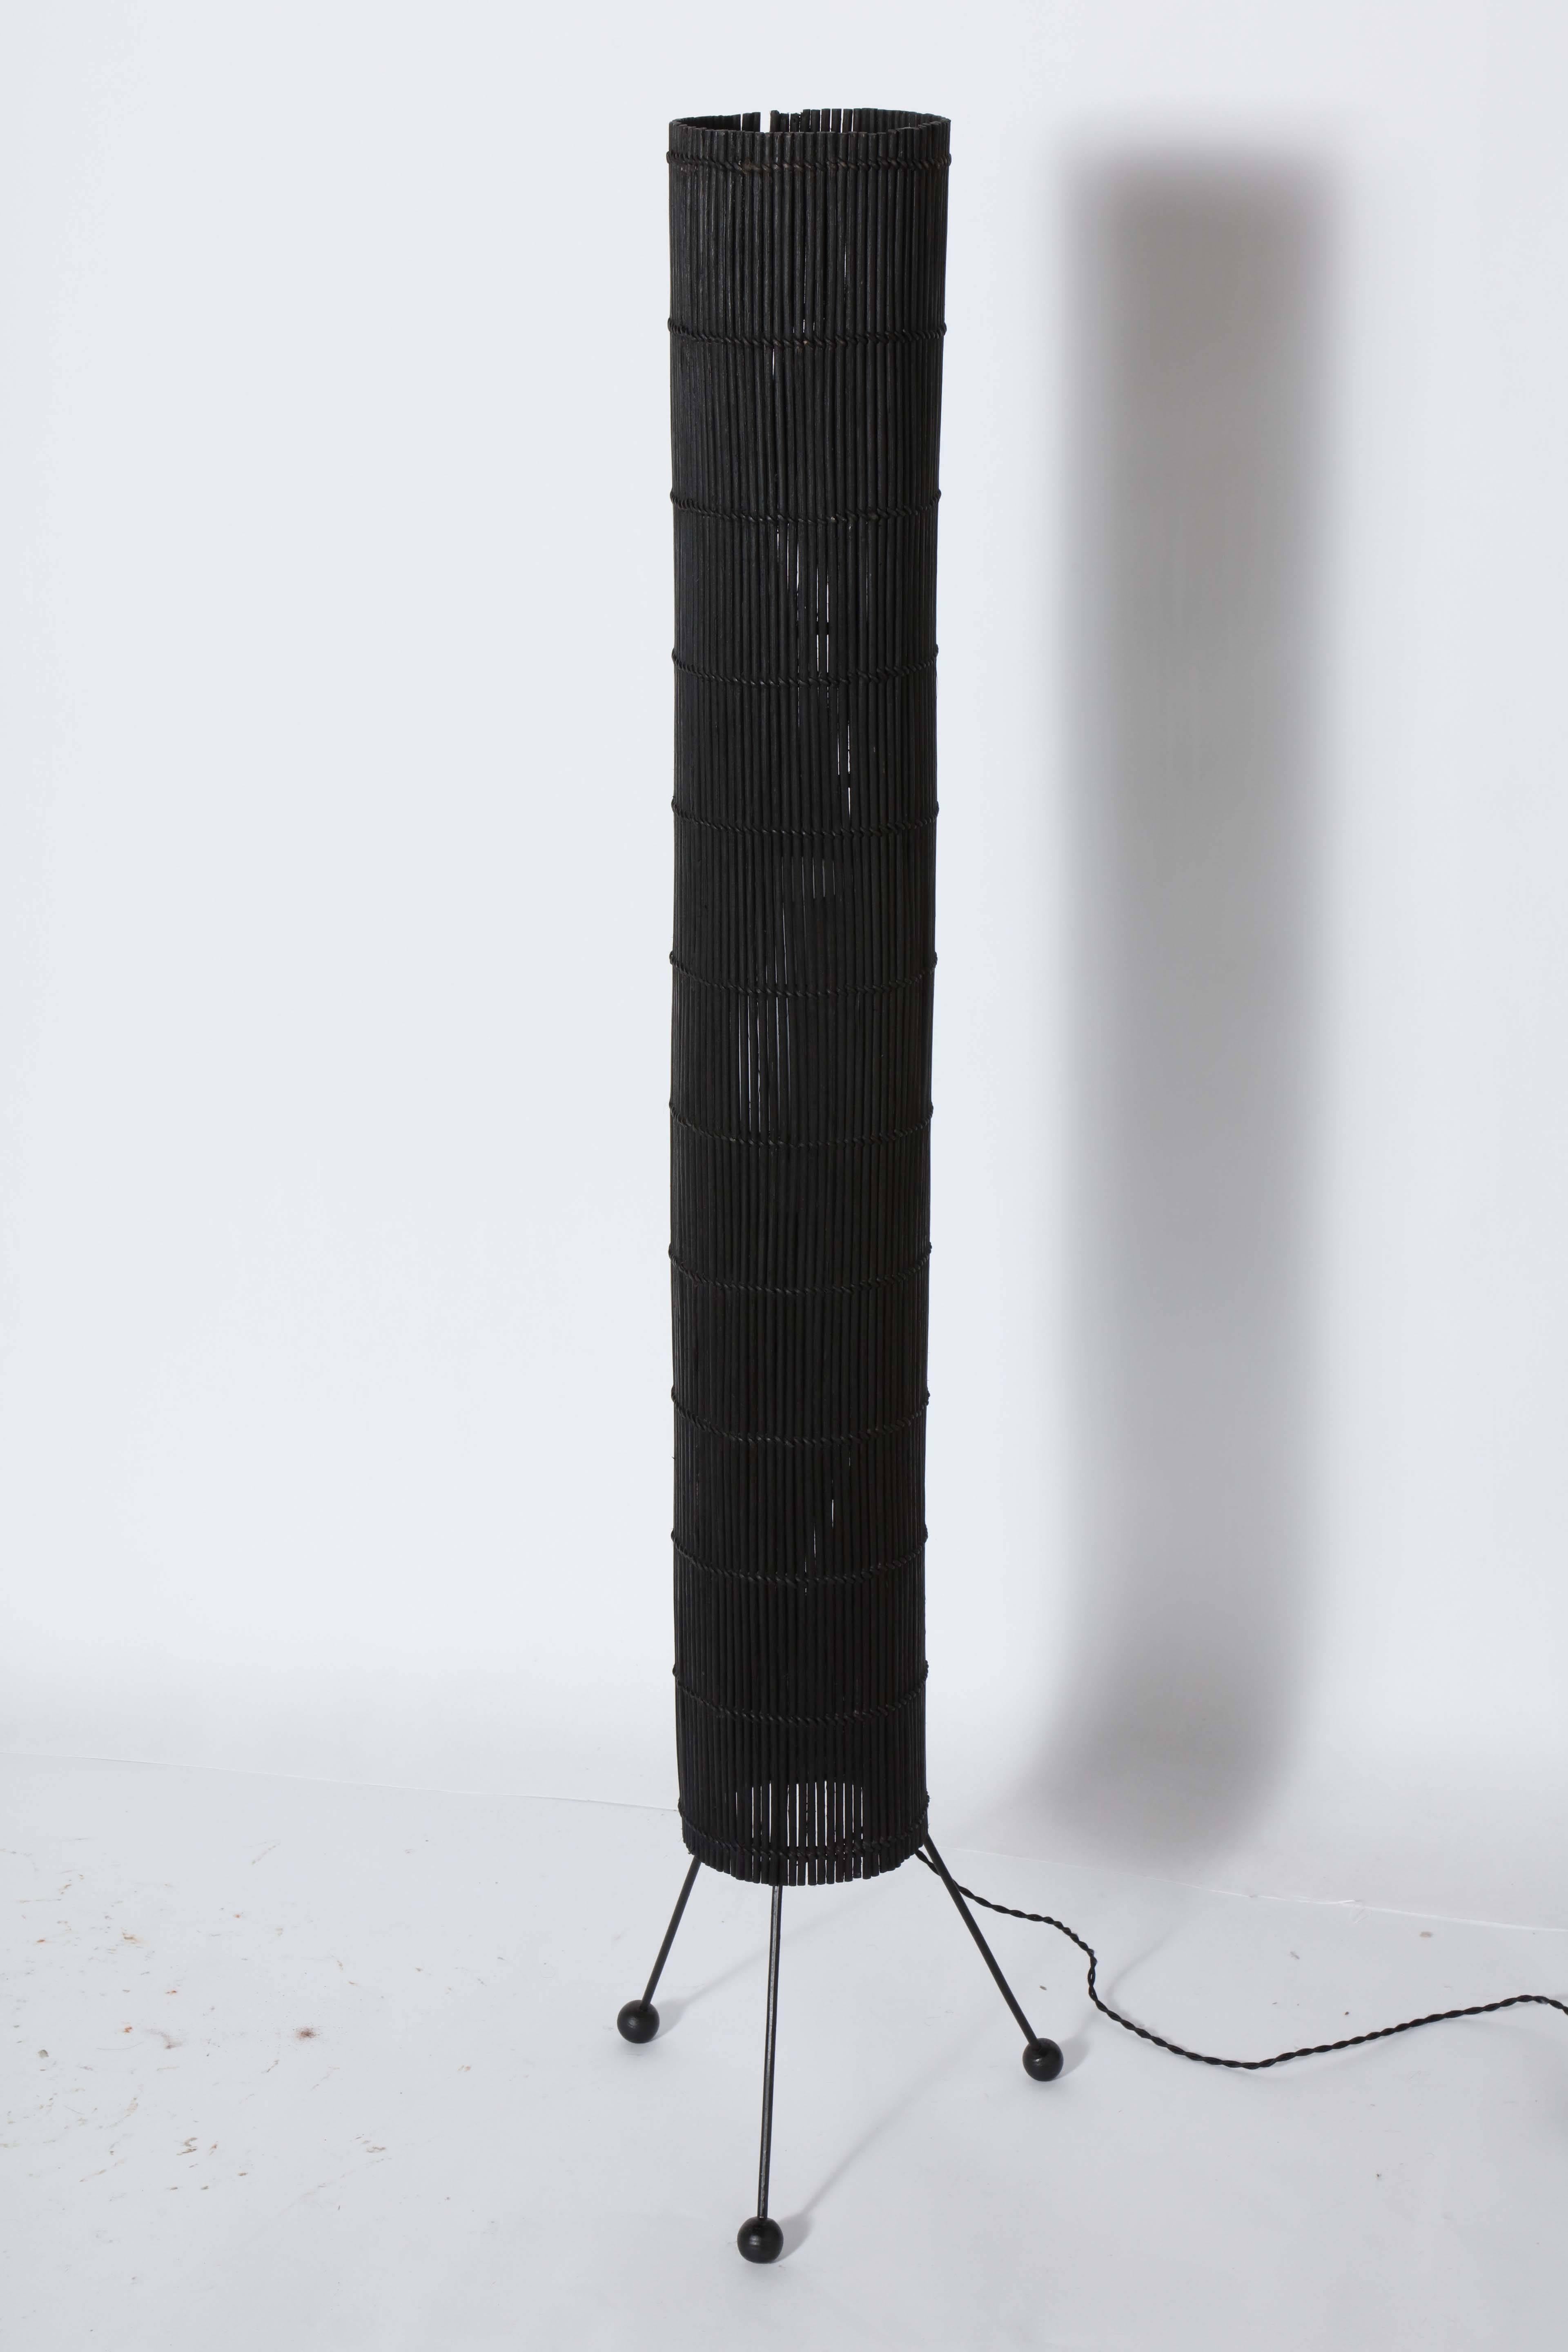 Tony Paul Style California Modern Black Wicker Cylinder Floor Lamp, 1950s  In Good Condition For Sale In Bainbridge, NY